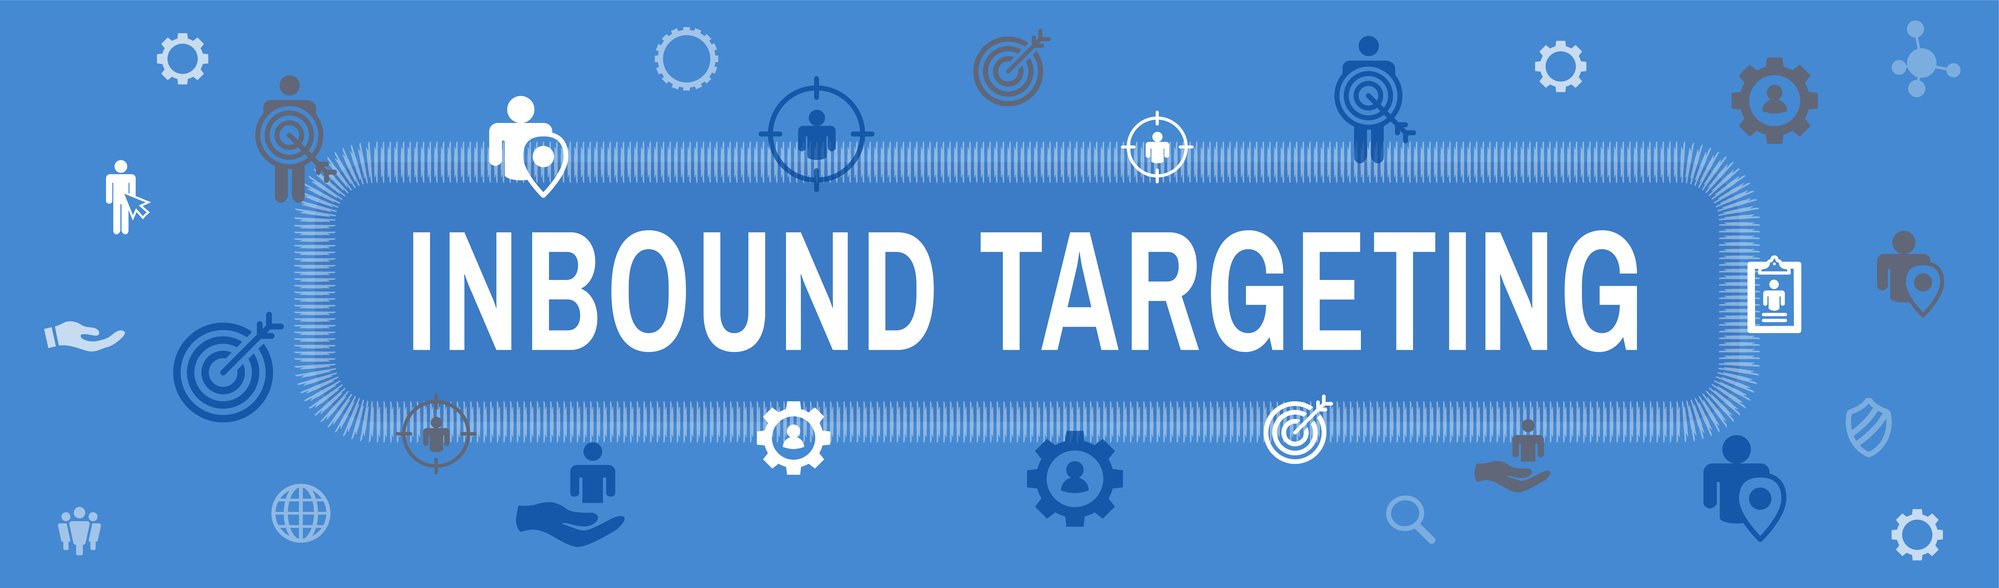 Digital Inbound Marketing & Targeting Web Banner with Vector Icon Set